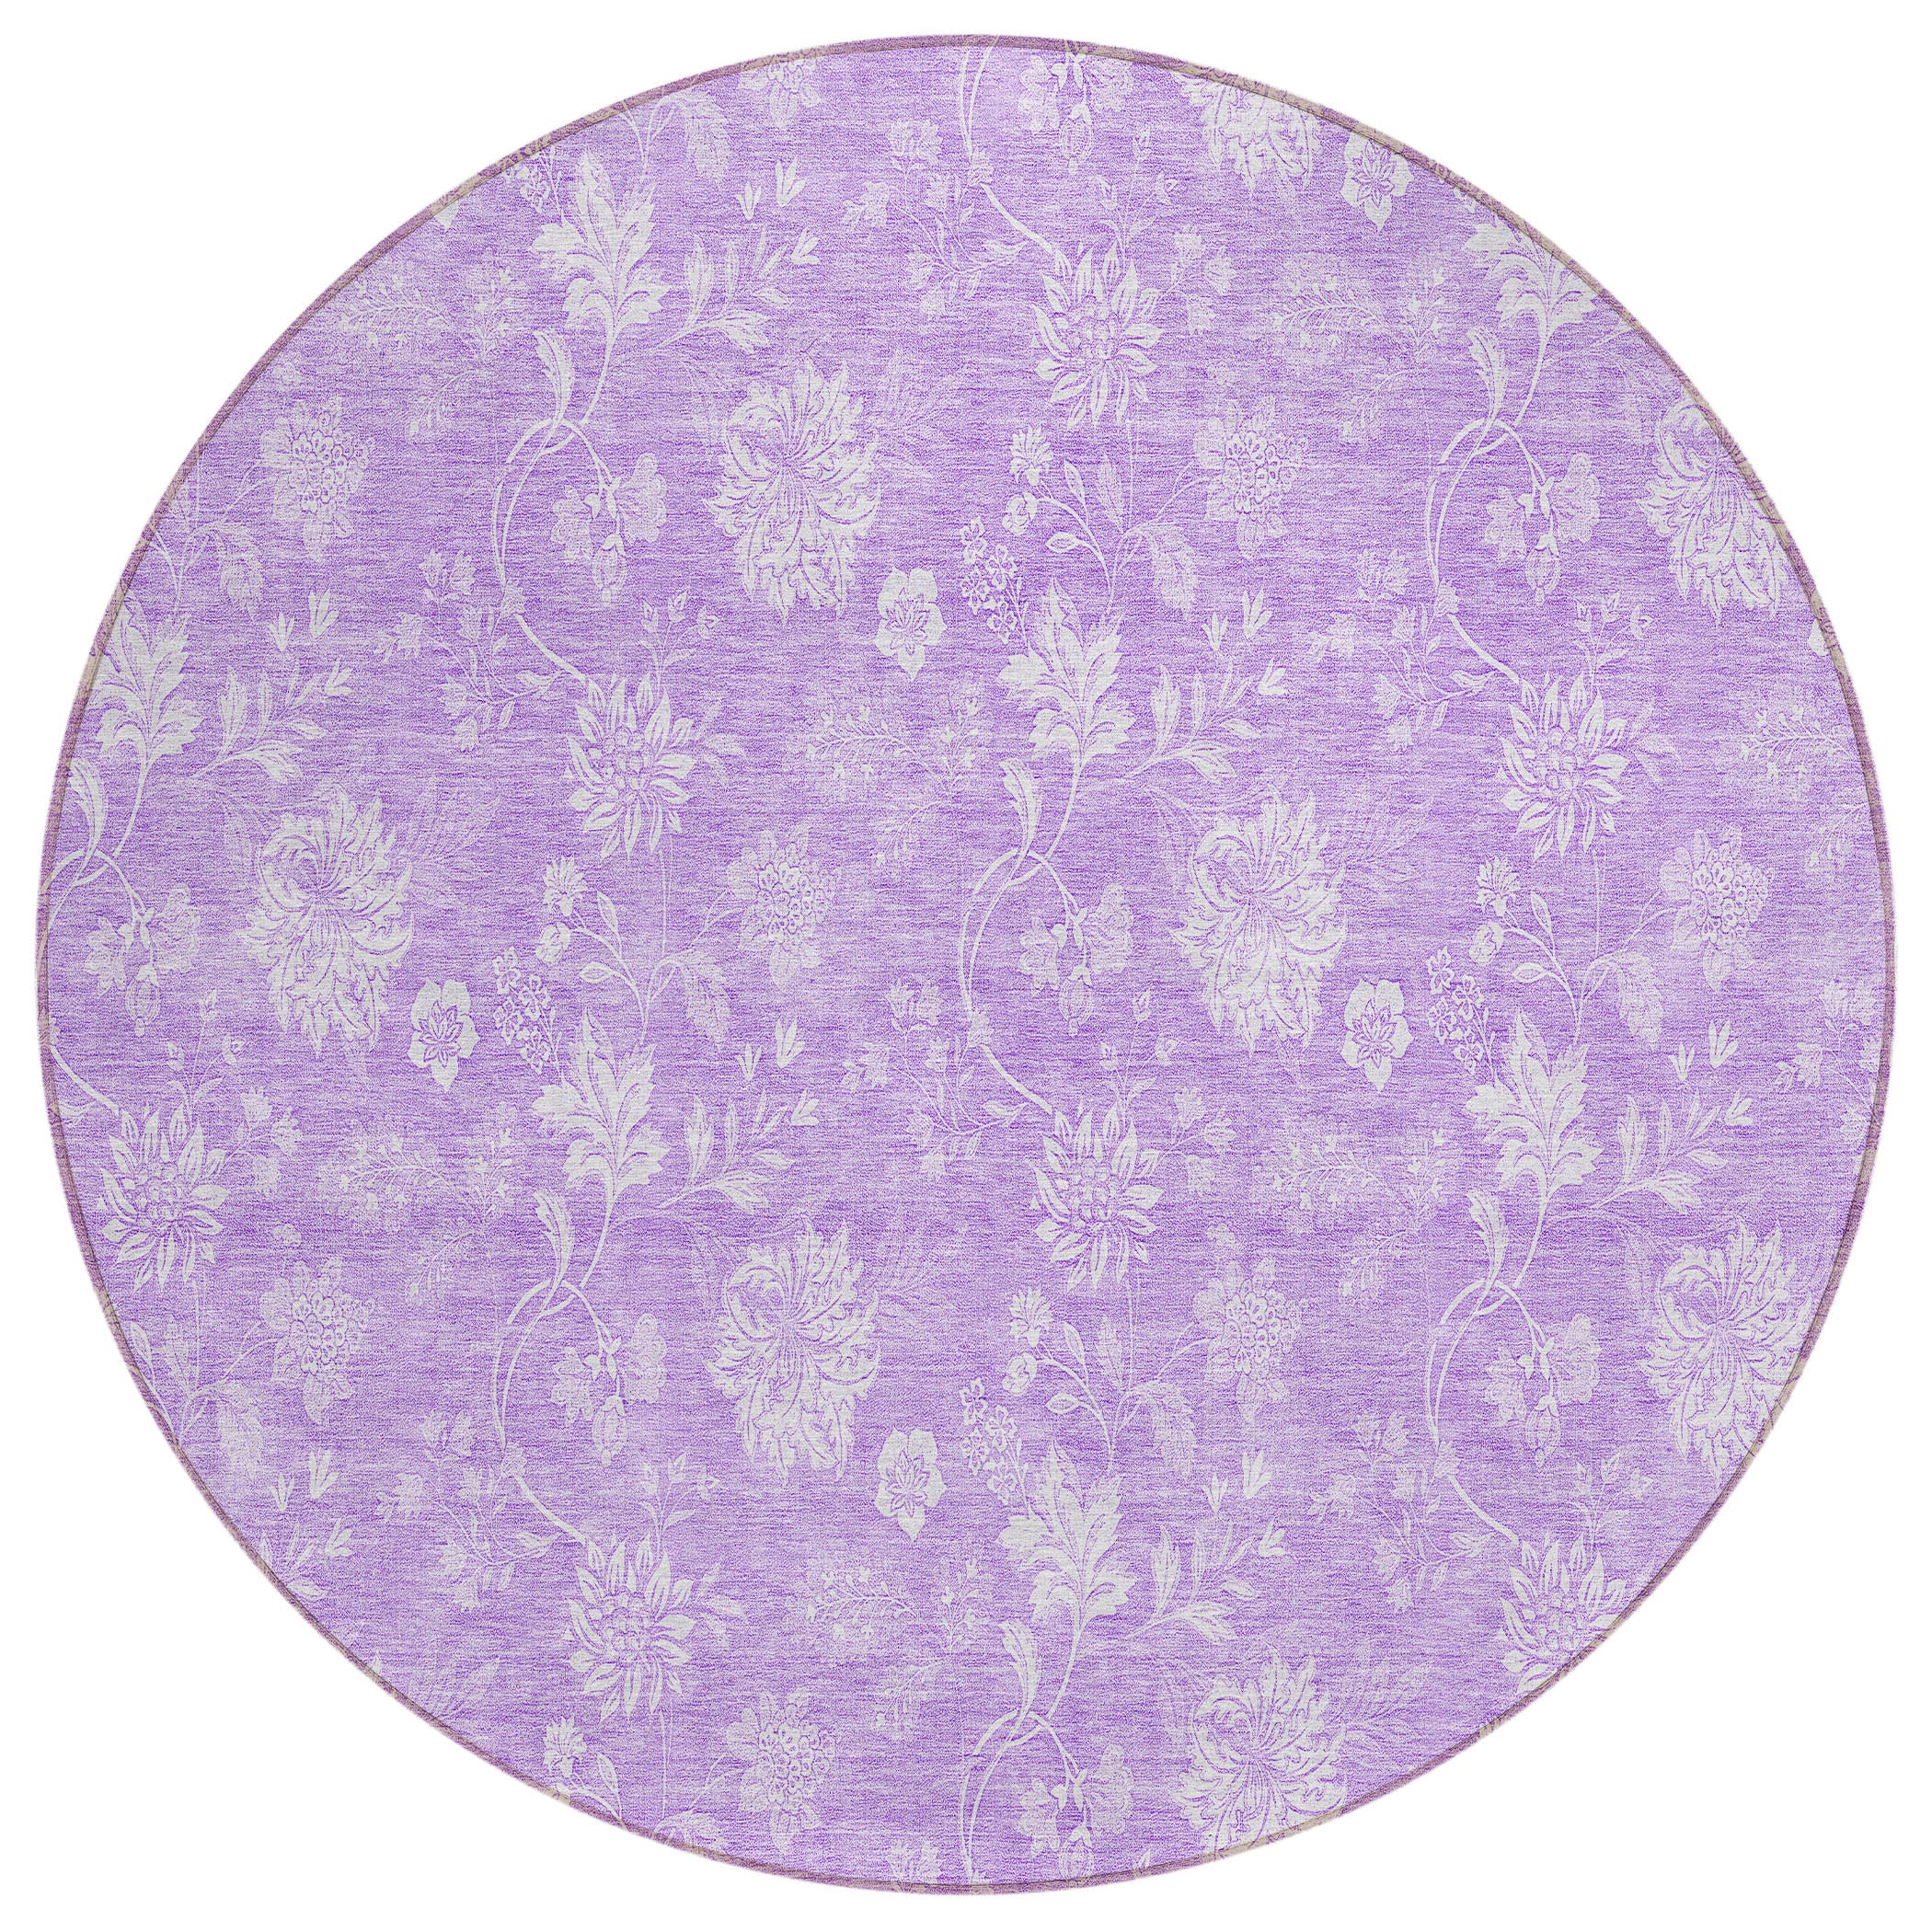 Chantille ACN681 Lilac